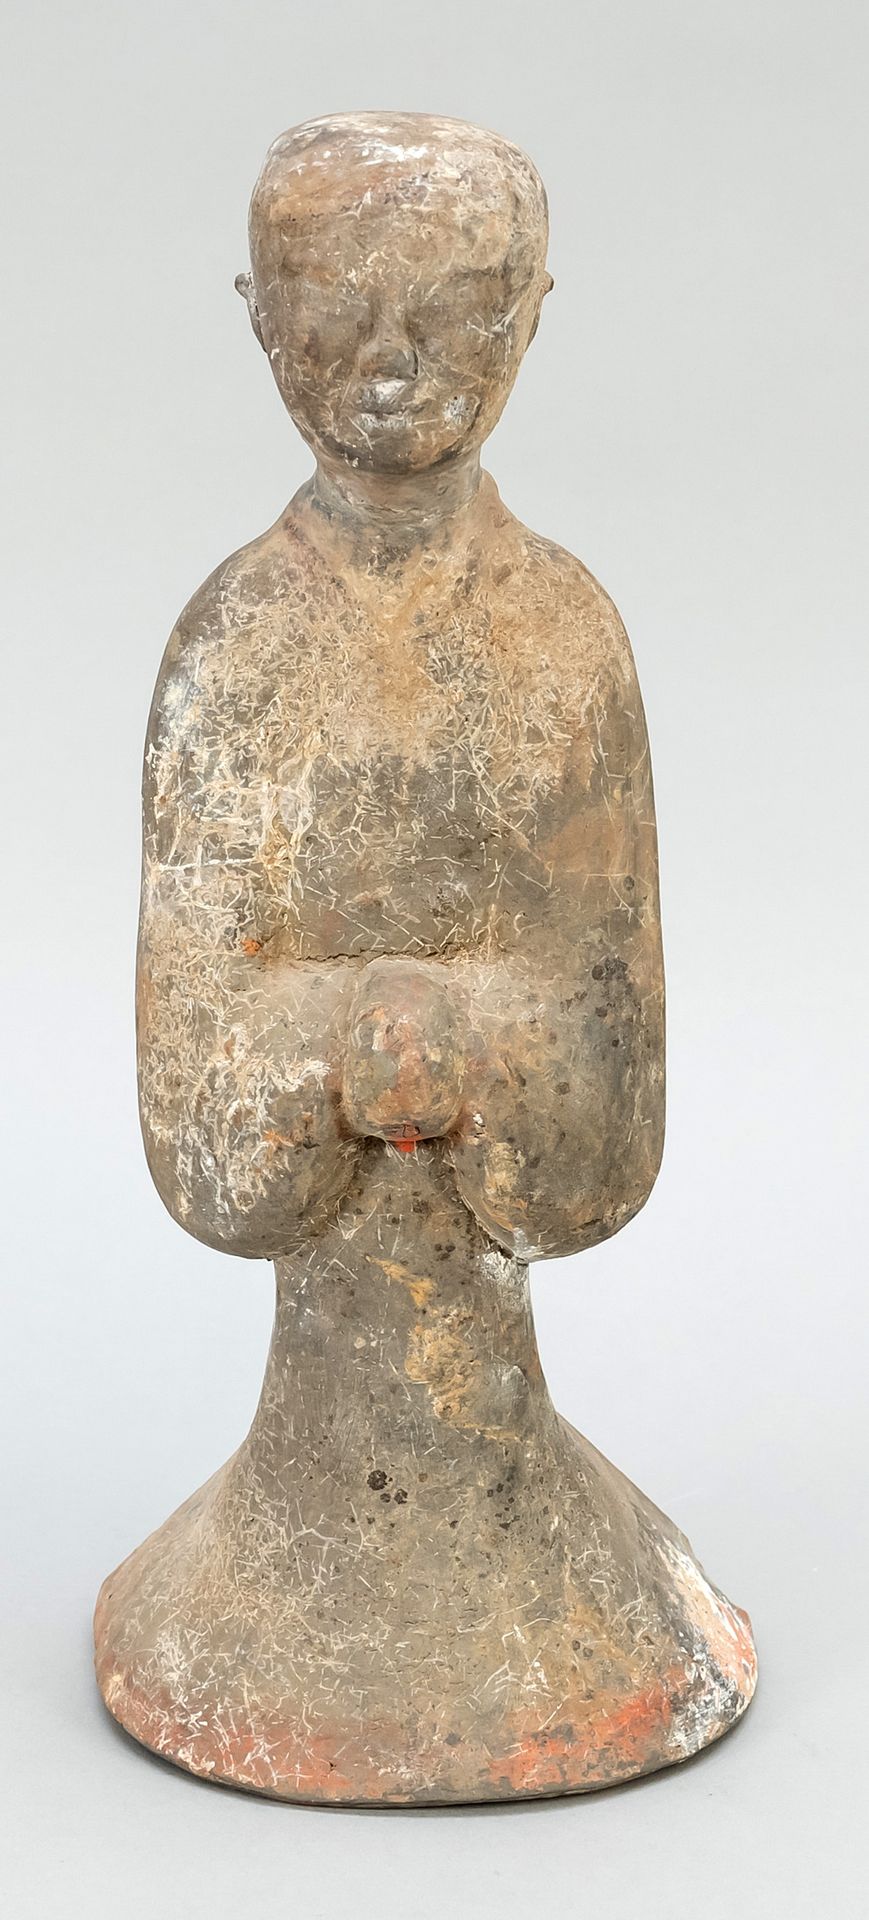 Null Figura in terracotta/argilla, Cina, età sconosciuta (periodo Tang?). Forma &hellip;